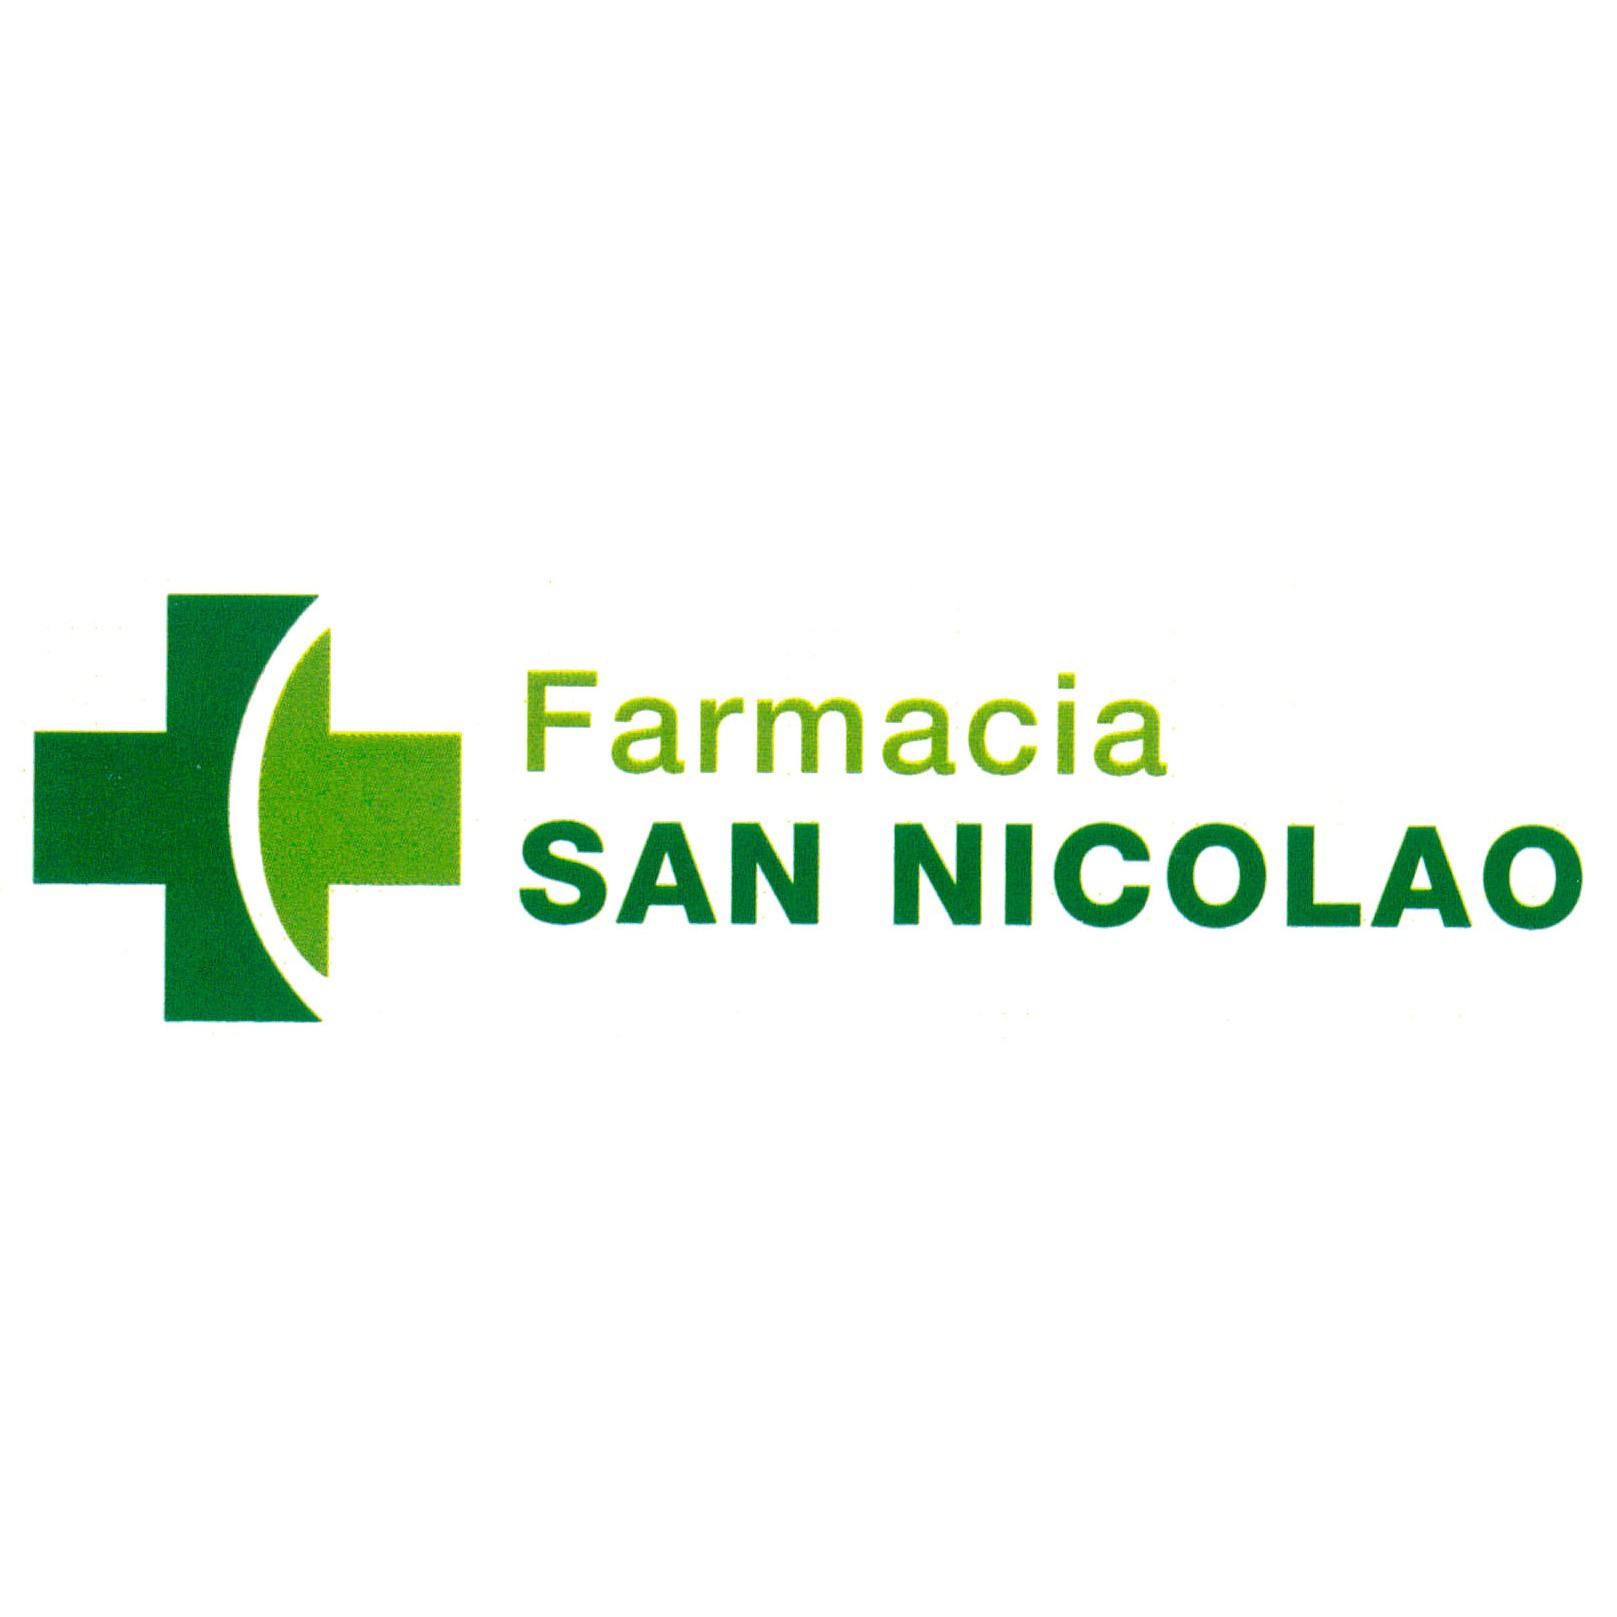 San Nicolao Farmacia Logo